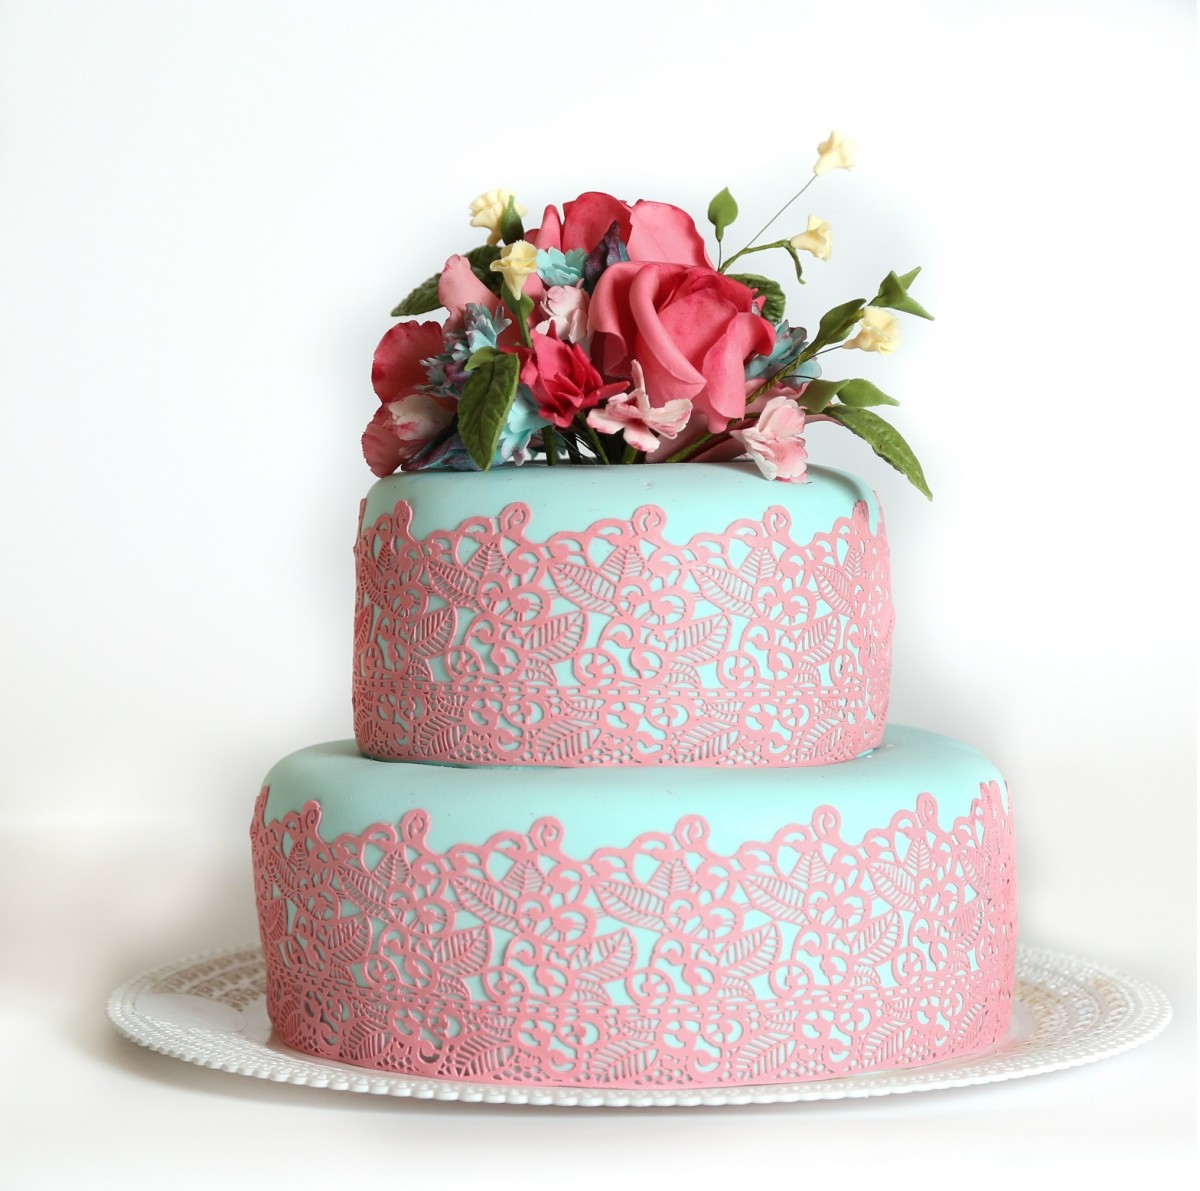 Cake by Sara Veffer